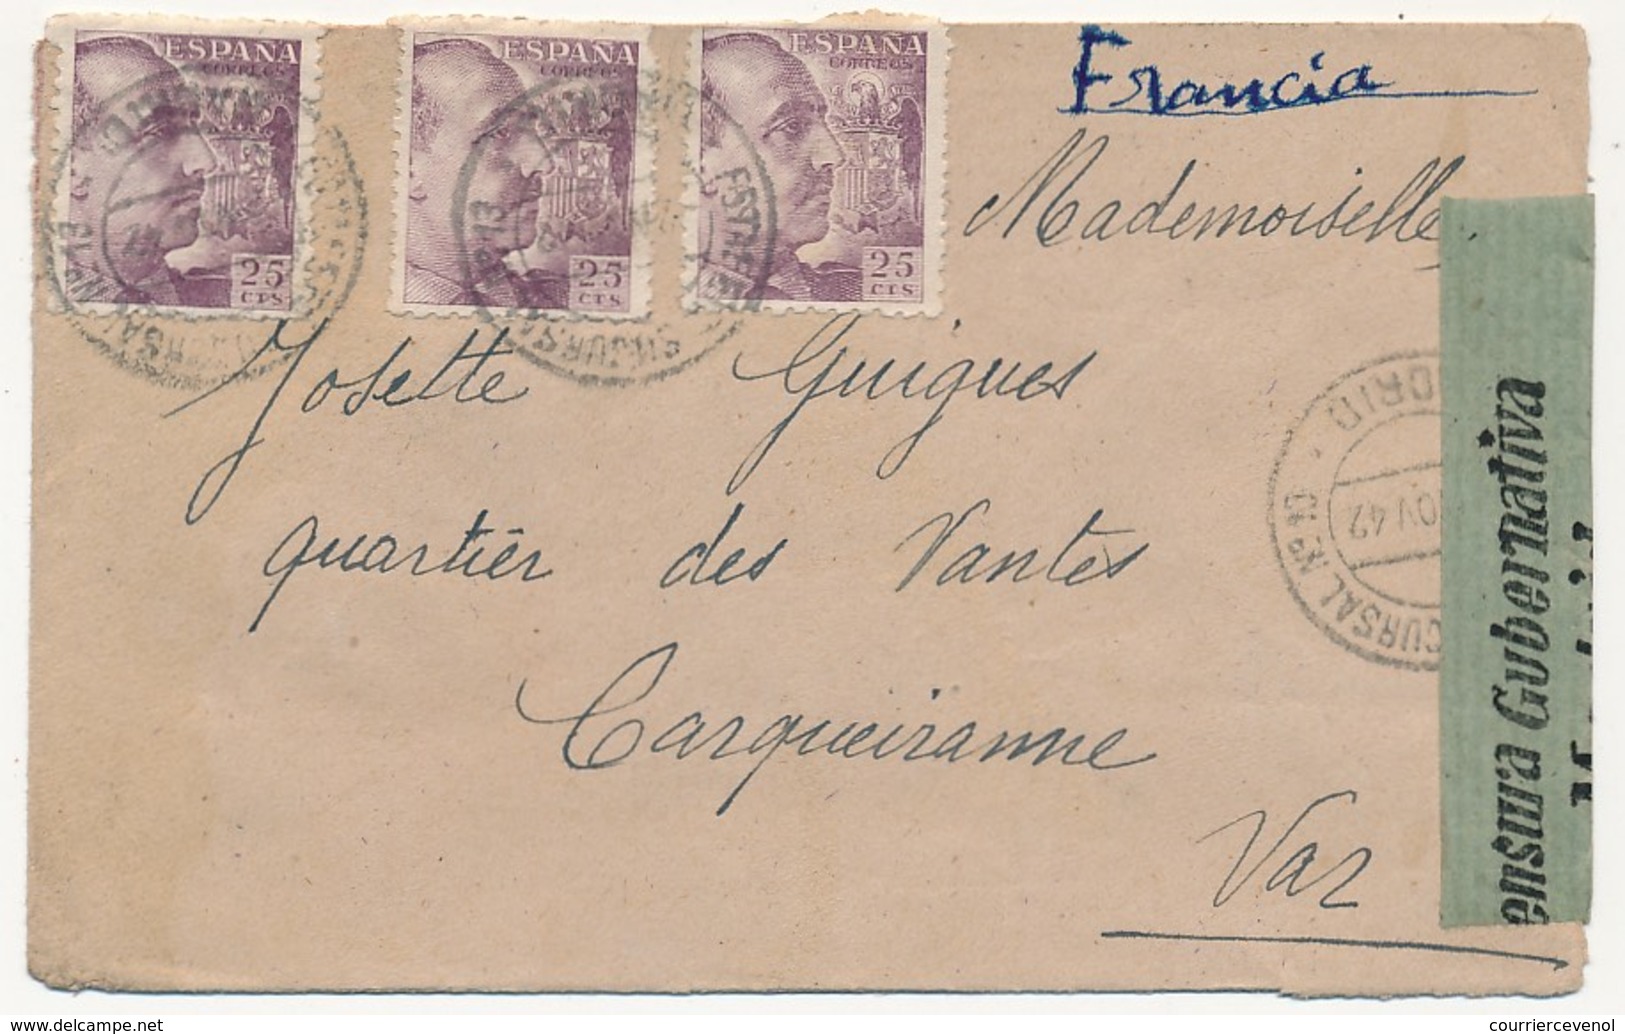 ESPAGNE - Enveloppe Censurée De Madrid, Bande "Censura Gubernativa Madrid" 1942 - Briefe U. Dokumente